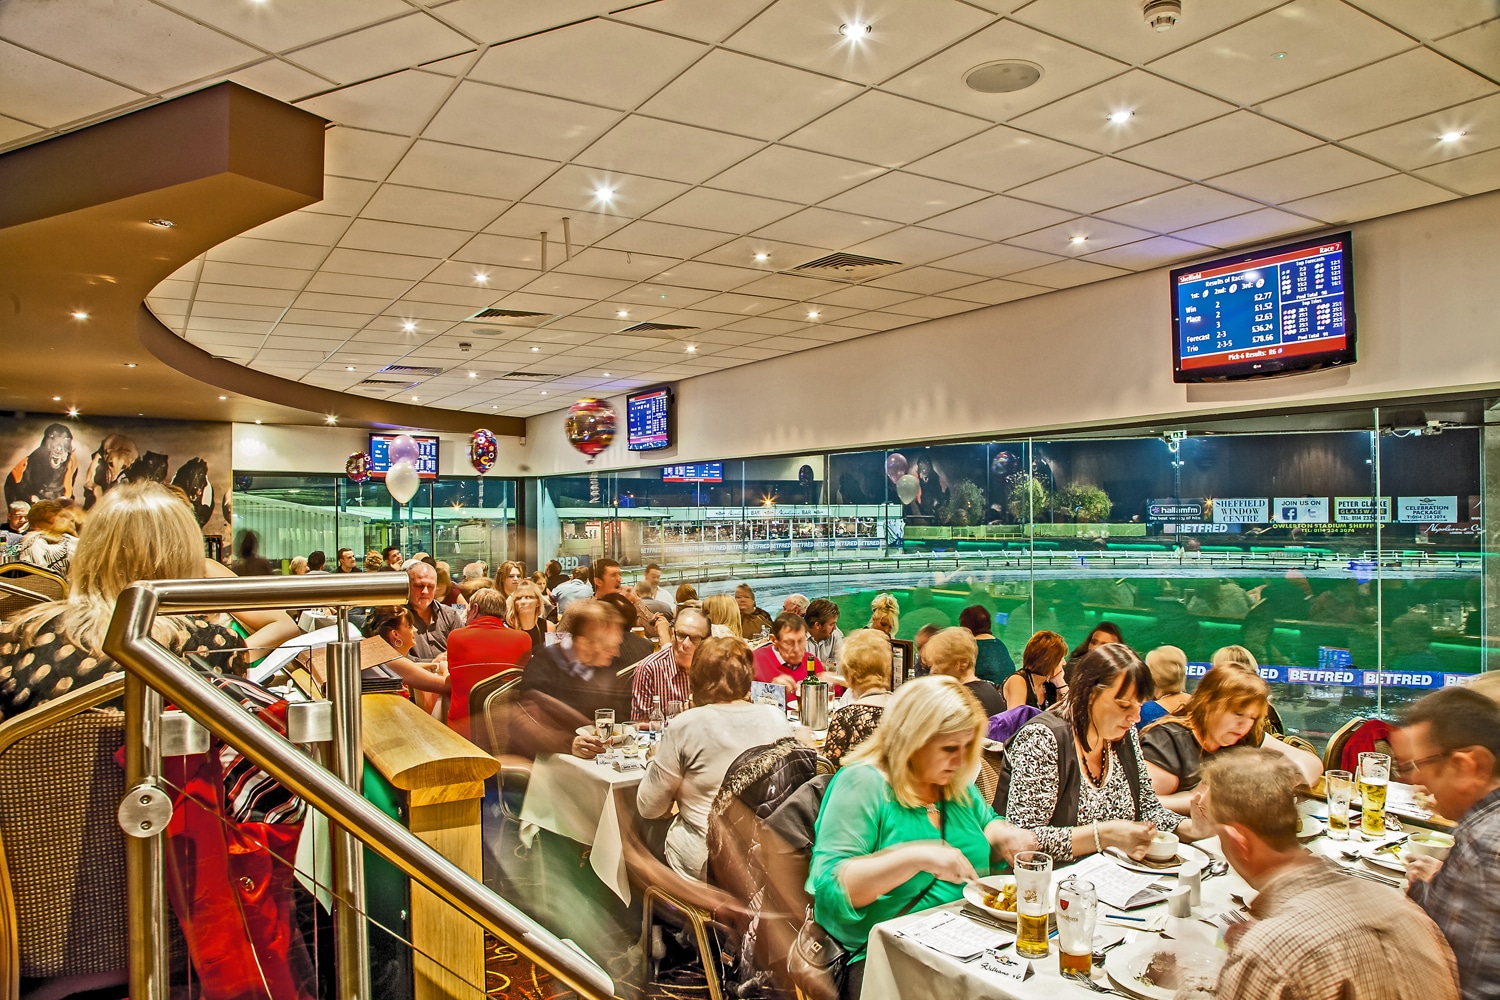 Panorama Restaurant - Owlerton Stadium